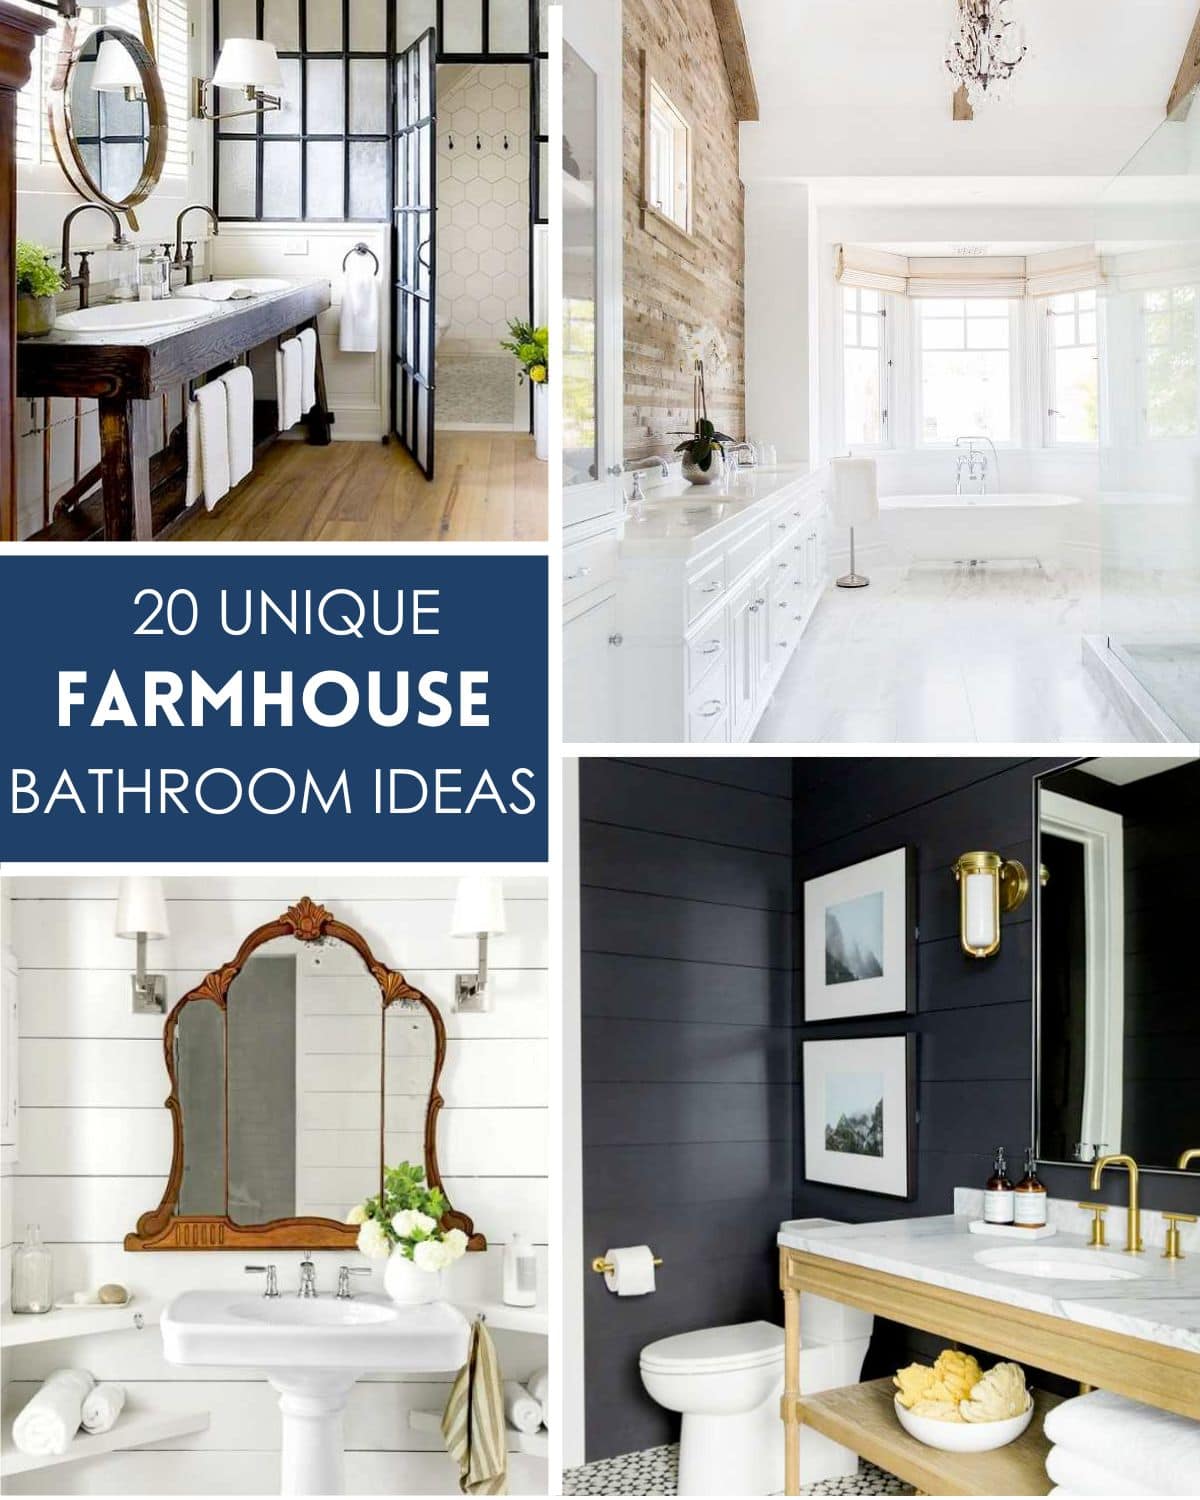 A variety of farmhouse bathroom ideas with shiplap, vintage mirror, black grid style shower glass, and farmhouse lighting.